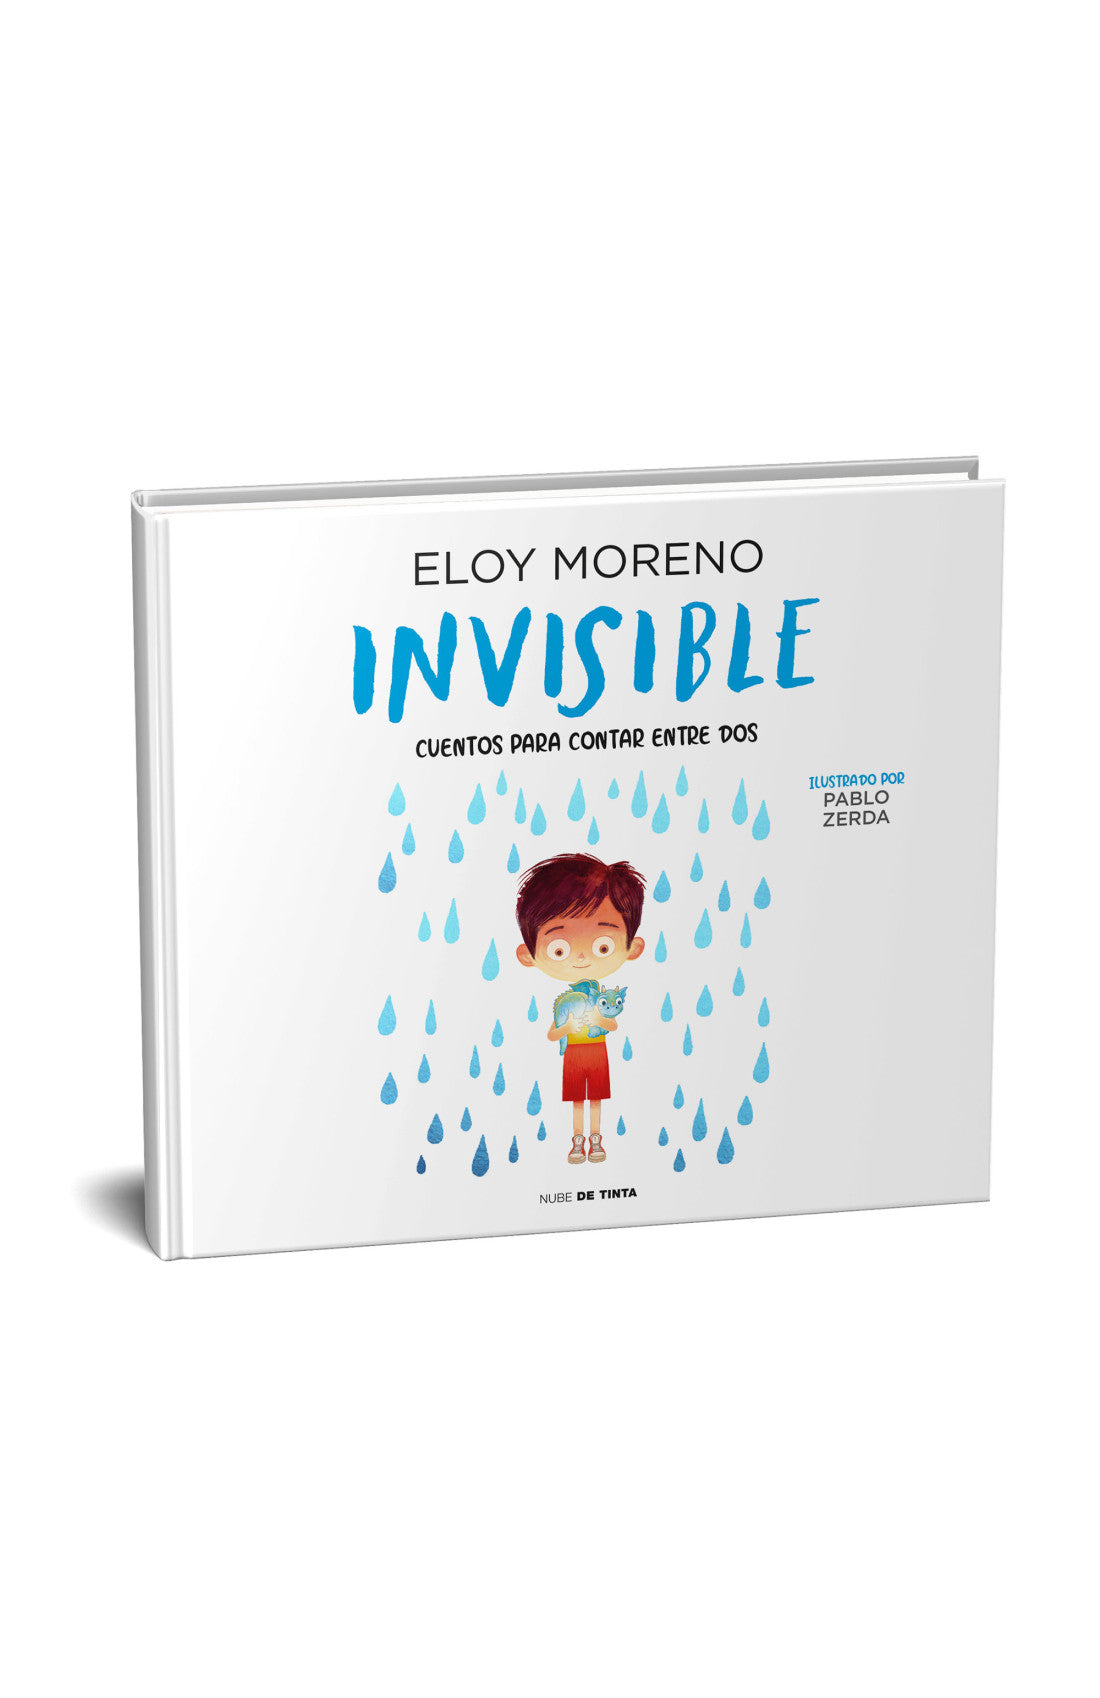 Libro Eloy Moreno - Invisible (Cuentos para contar entre dos)